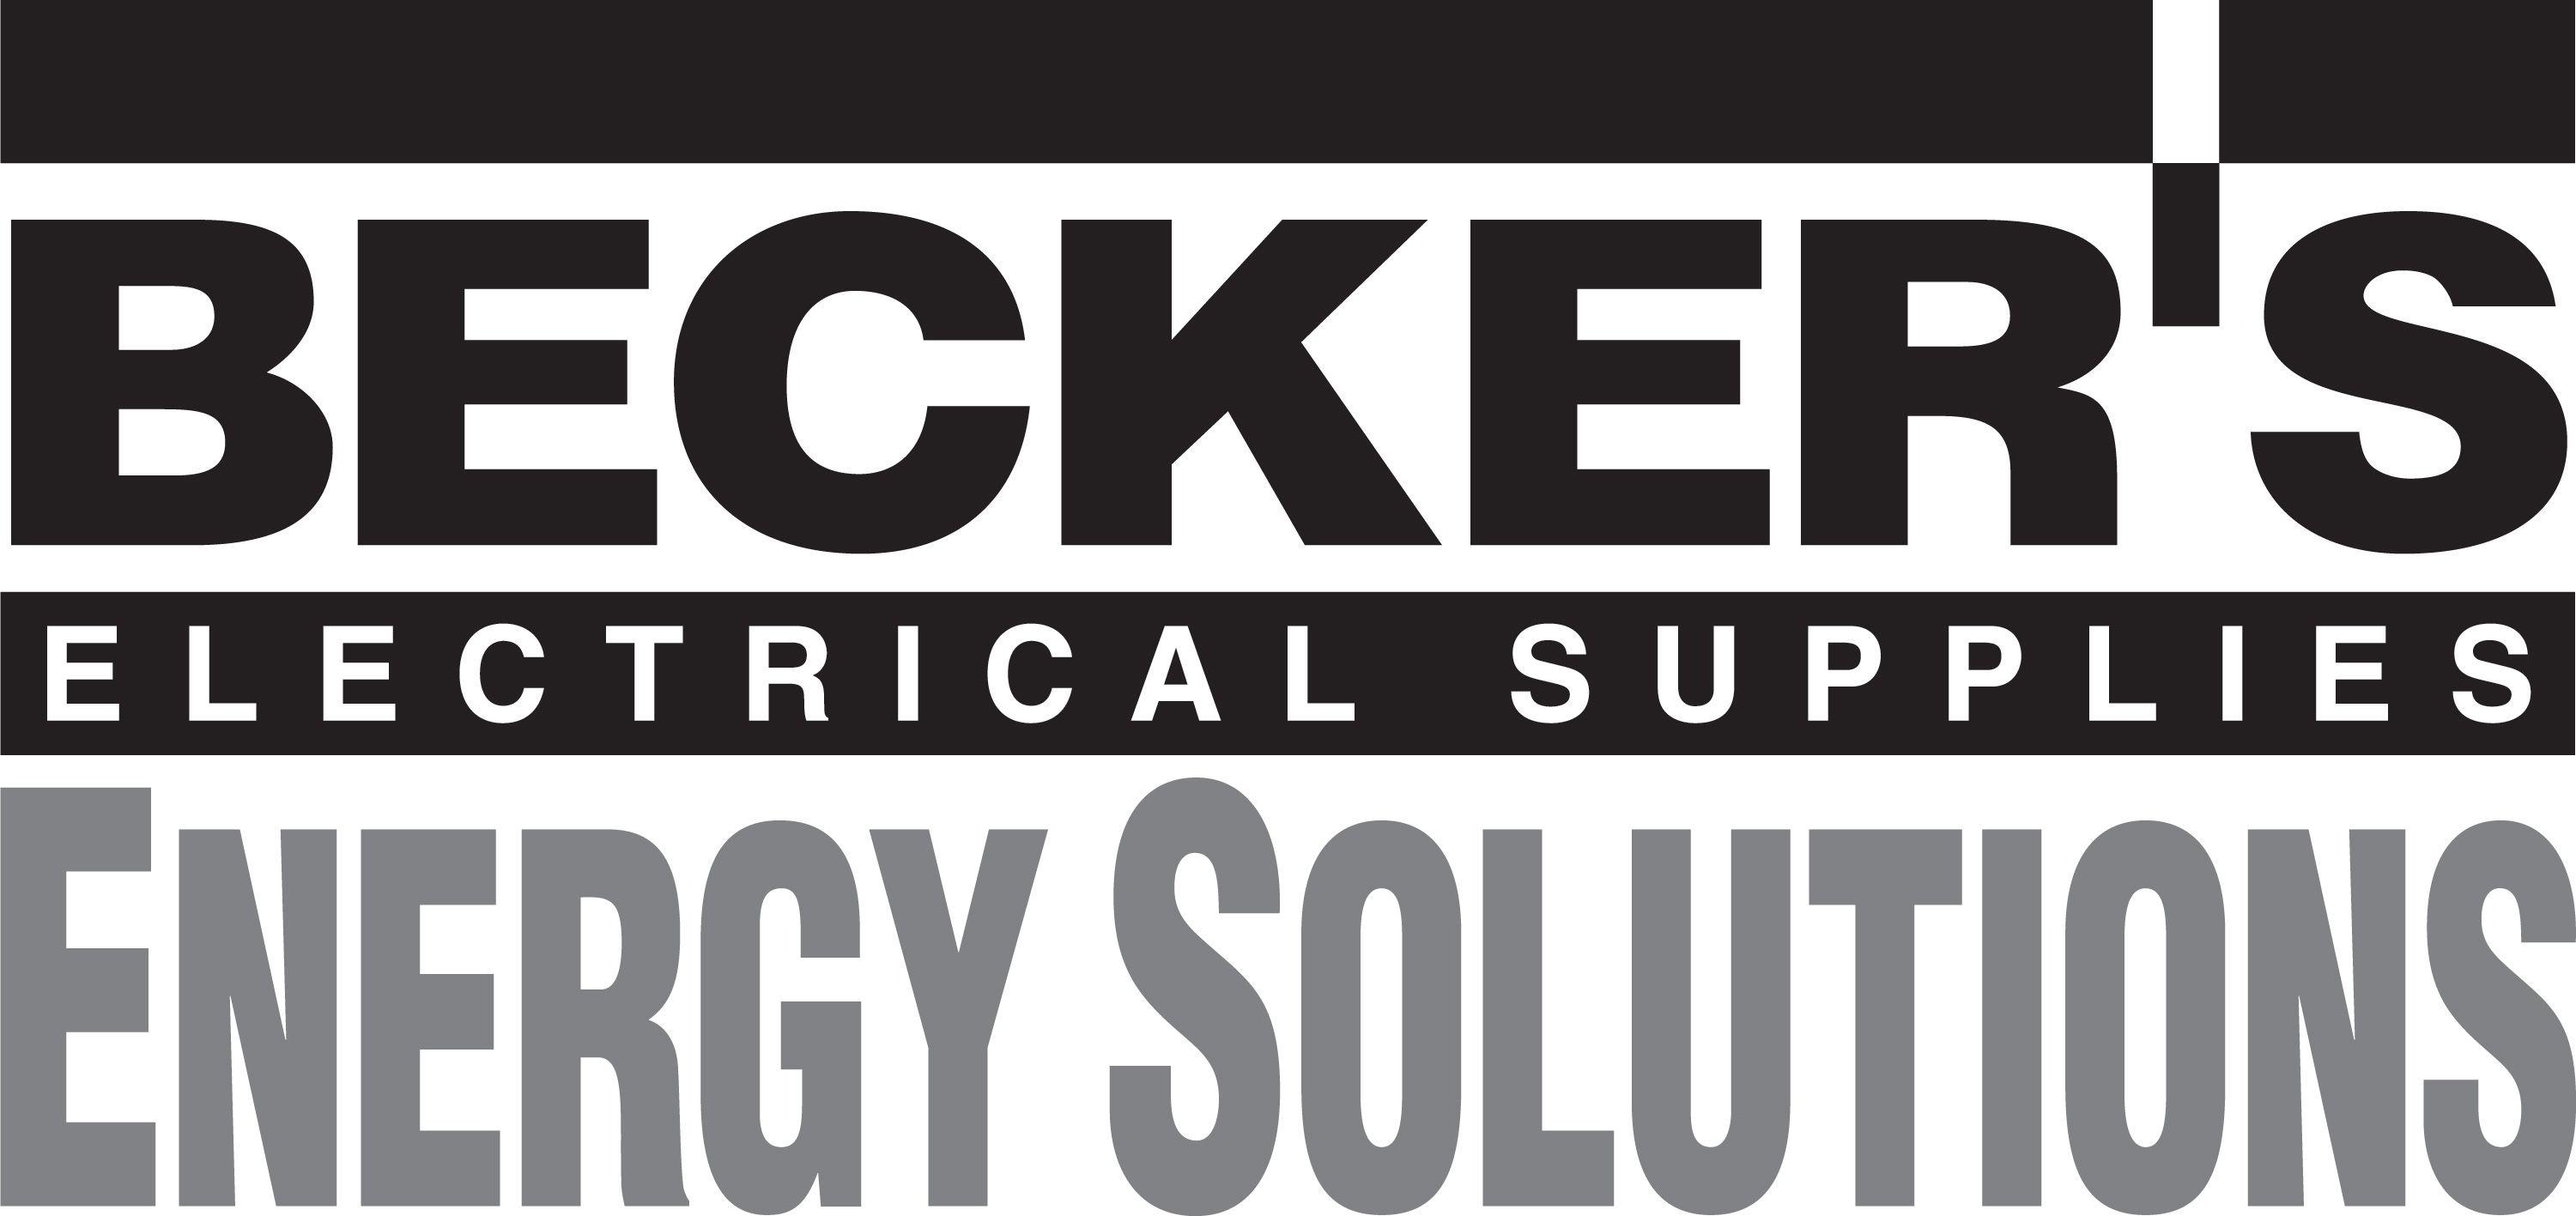 Becker Logo - Becker Electric Supply | Logos & Style Guide